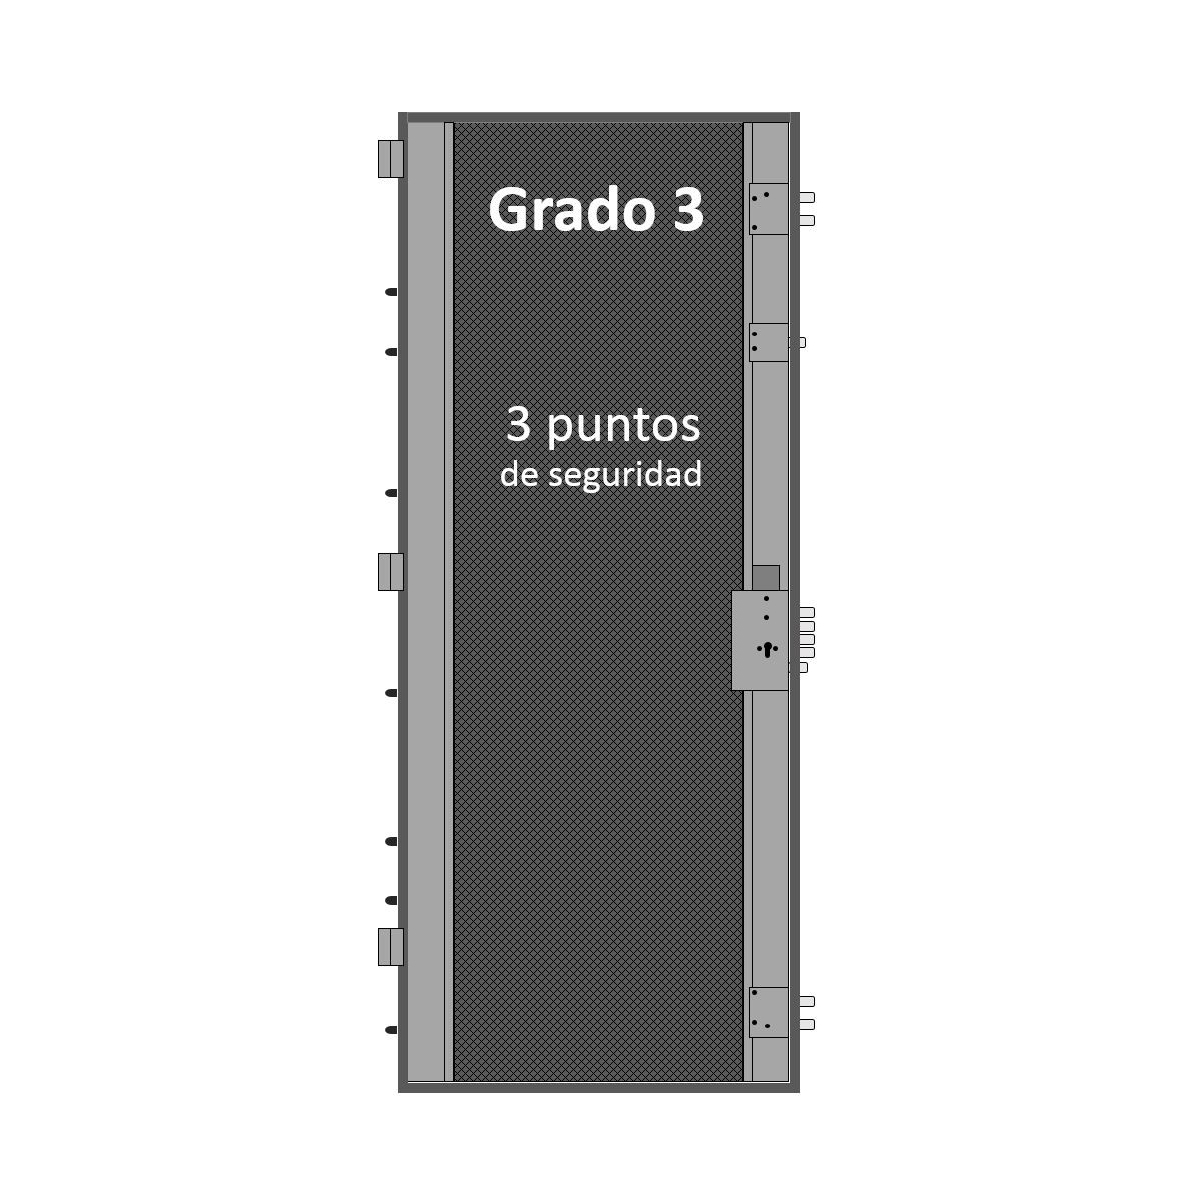 Puertas acorazadas Serie Omega Cearco - Puerta Acorazada 90cm grado 3 Lanzuela Omega